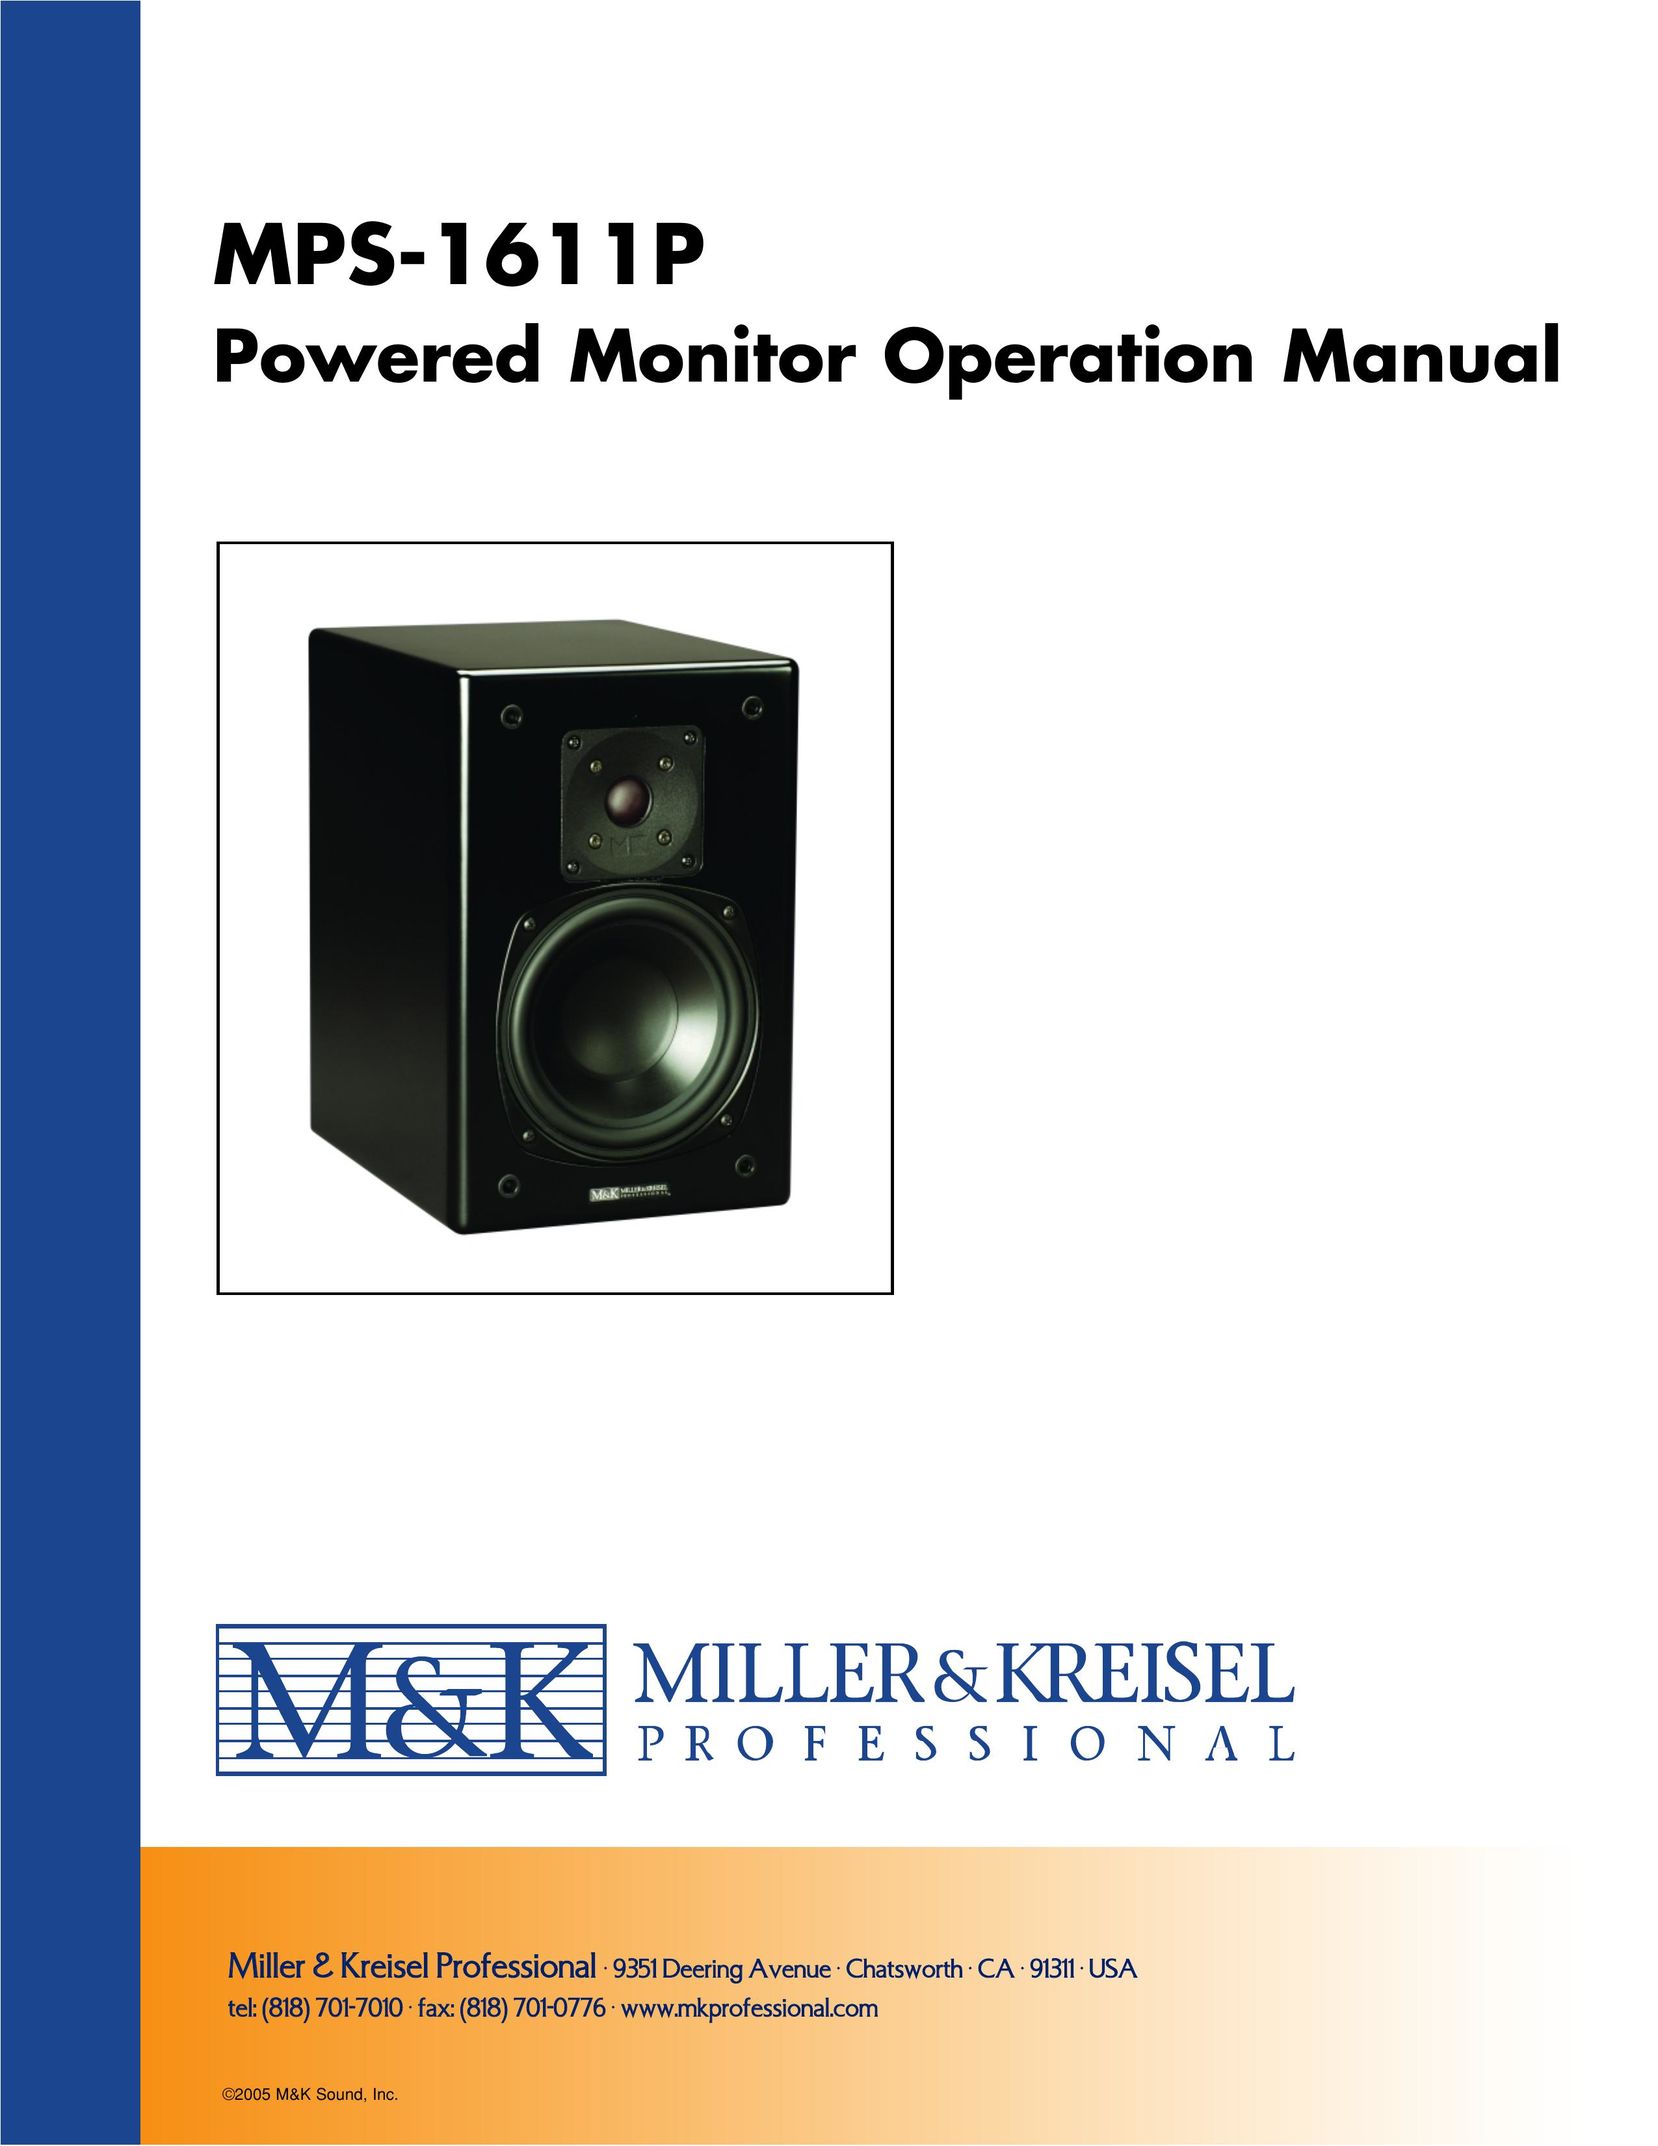 MK Sound MPS-1611P Speaker User Manual